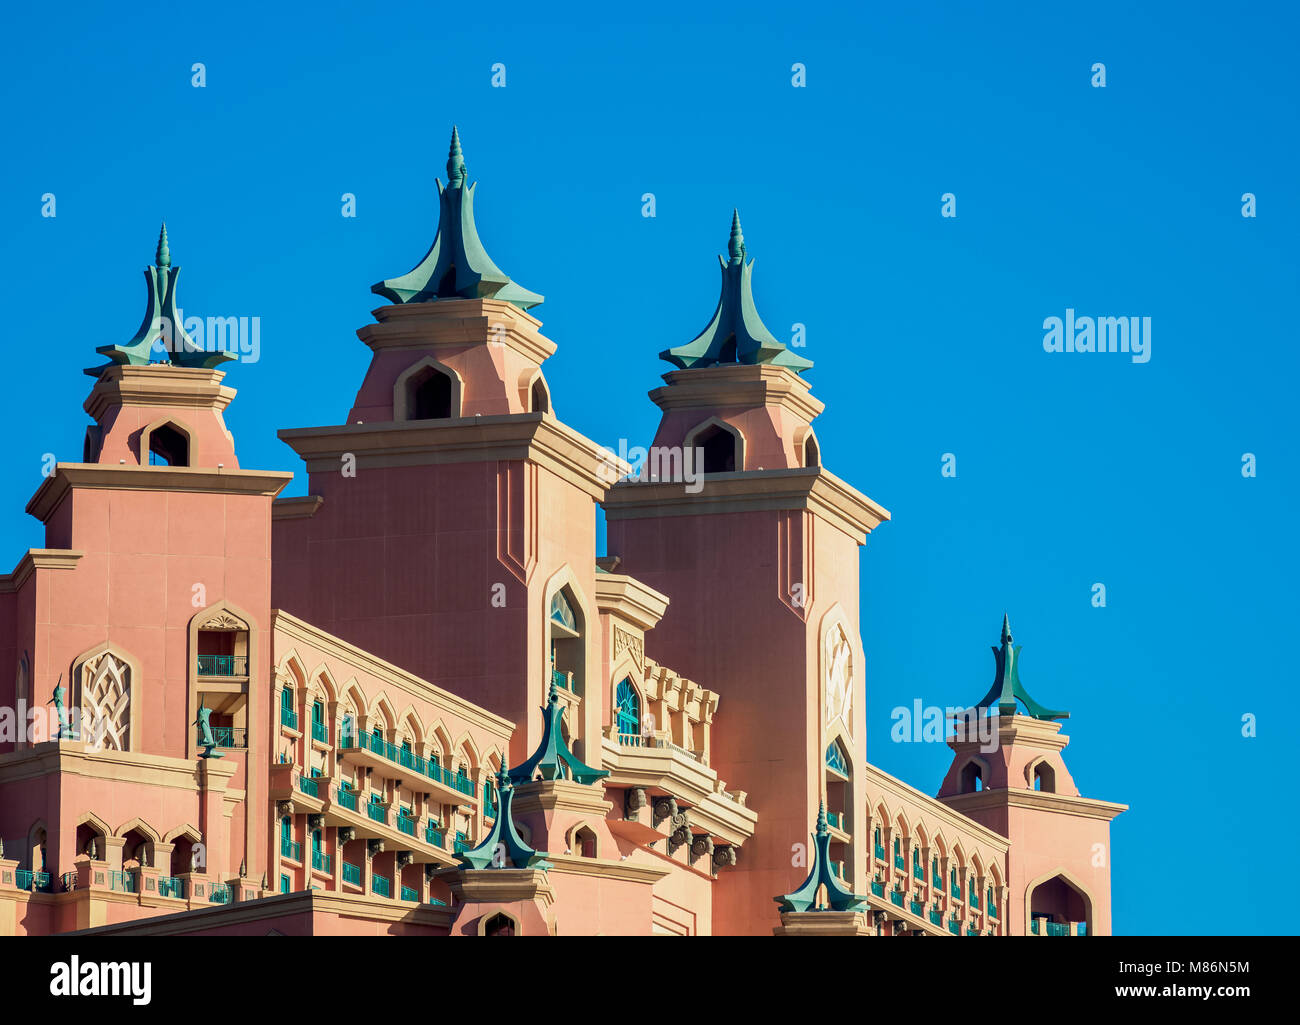 Atlantis The Palm Luxury Hotel, Palm Jumeirah artificial island, Dubai, United Arab Emirates Stock Photo